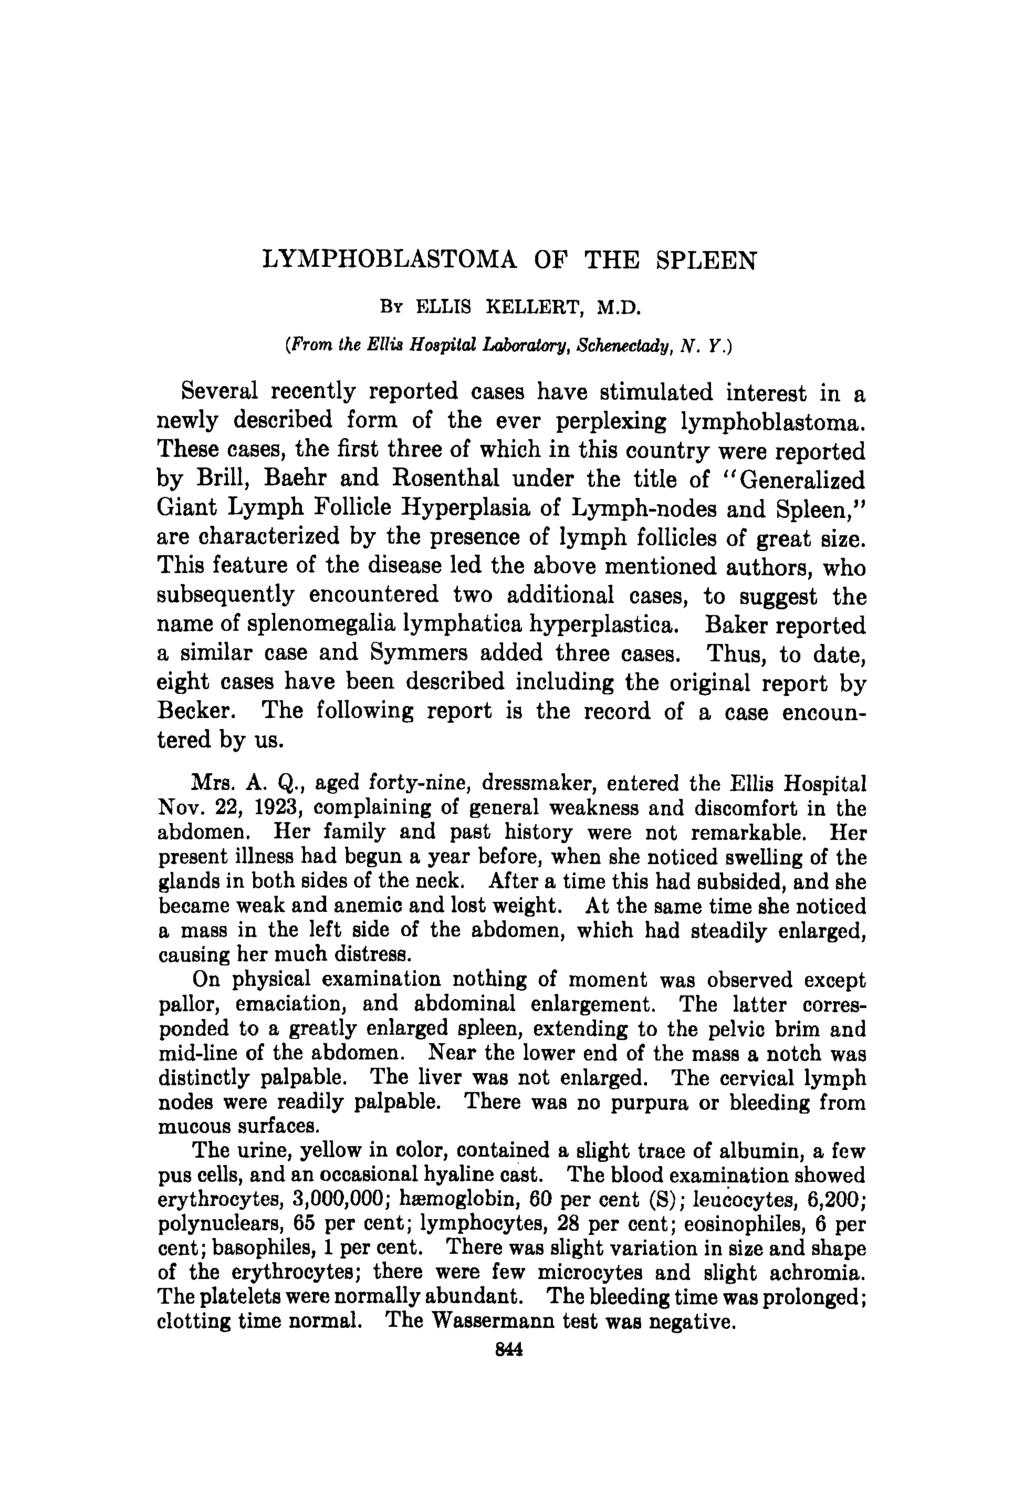 LYMPHOBLASTOMA OF THE SPLEEN By ELLIS KELLERT, M.D. (From the Ellis Hospital Laboratory, Schenectady, N. Y.